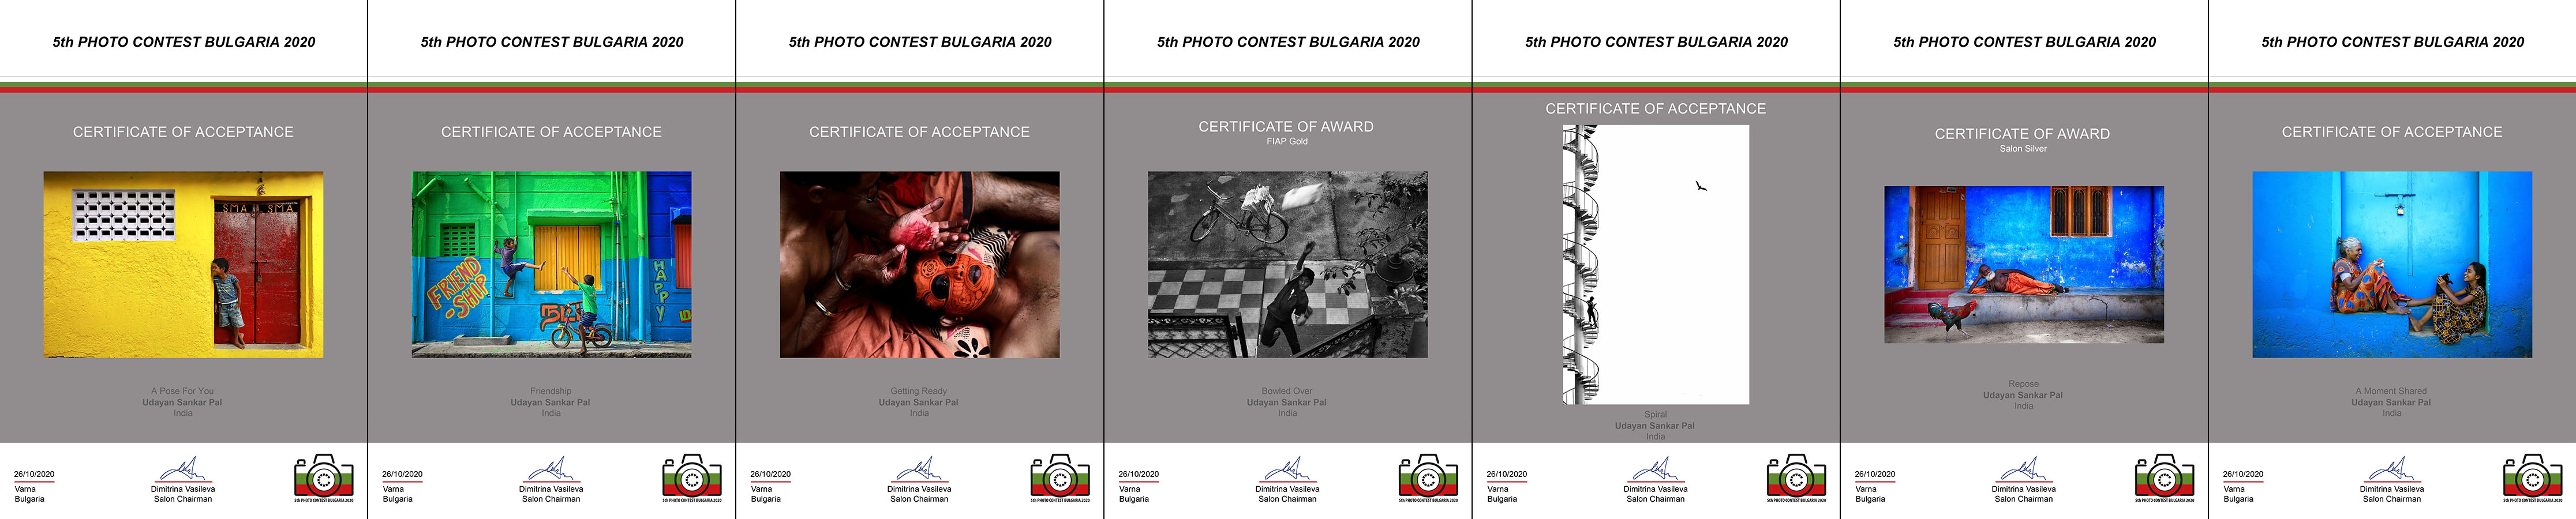 Photo Contest Bulgaria-2020